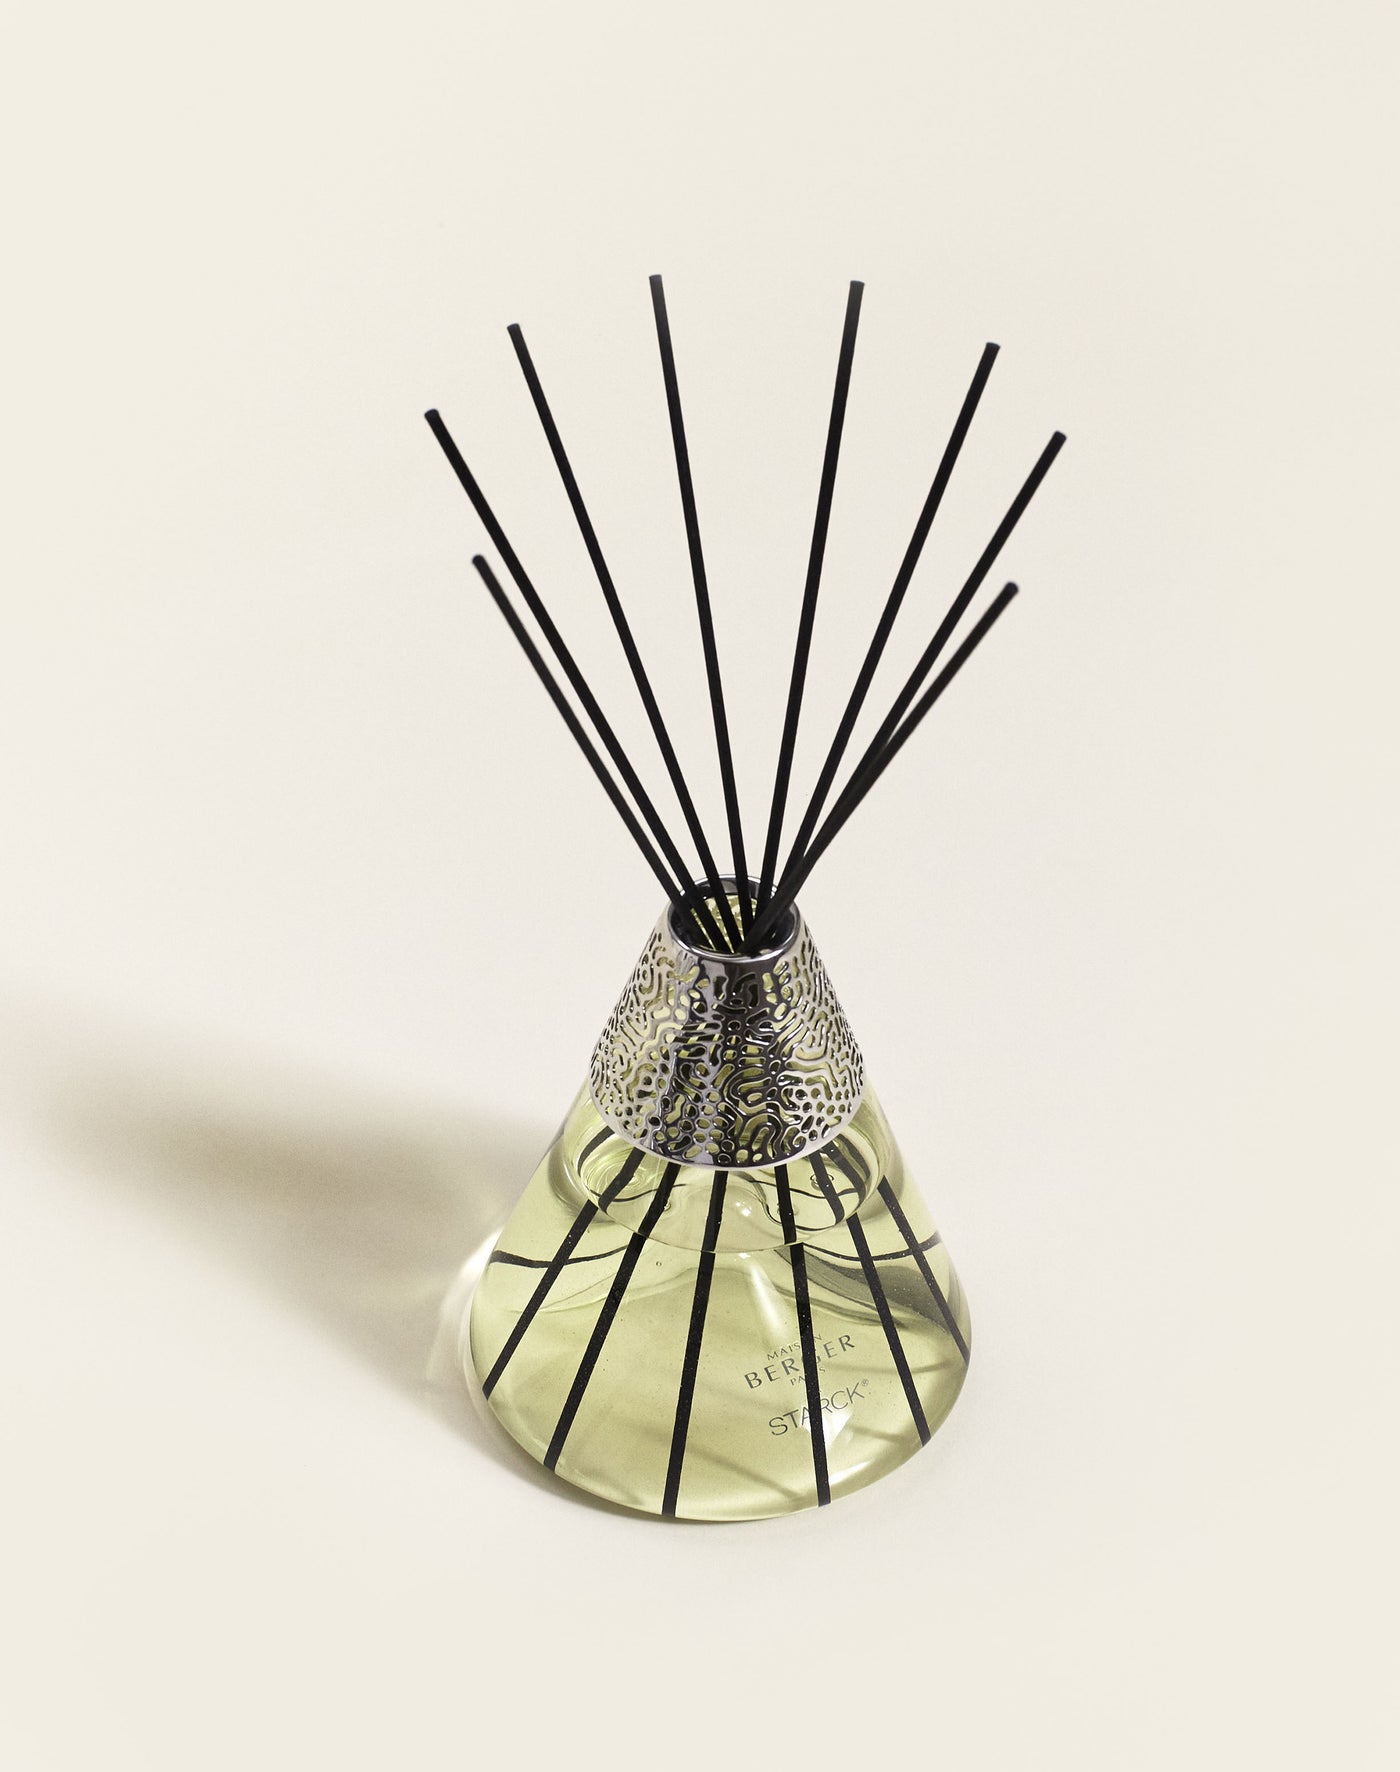 Parfumverspreider by Starck Peau d'Ailleurs